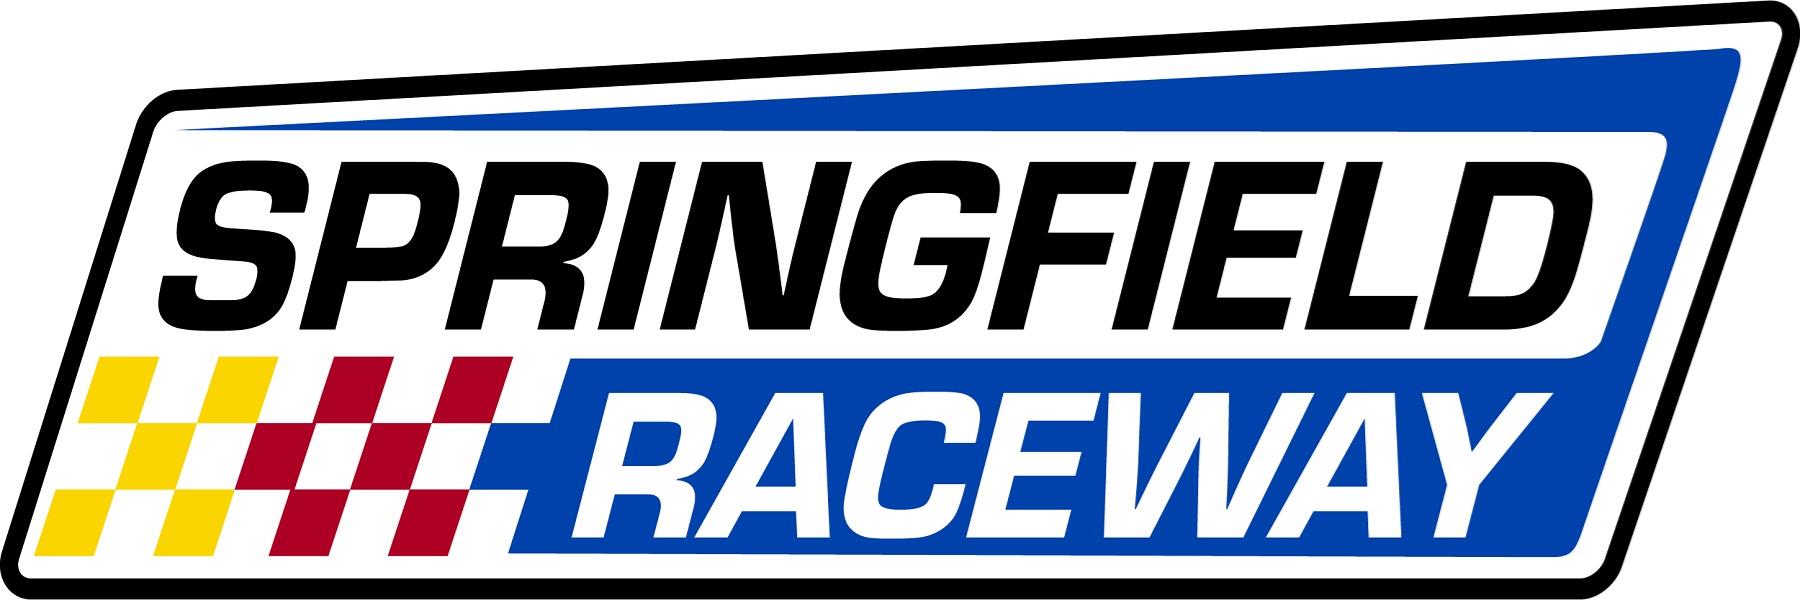 9/4/2022 - Springfield Raceway